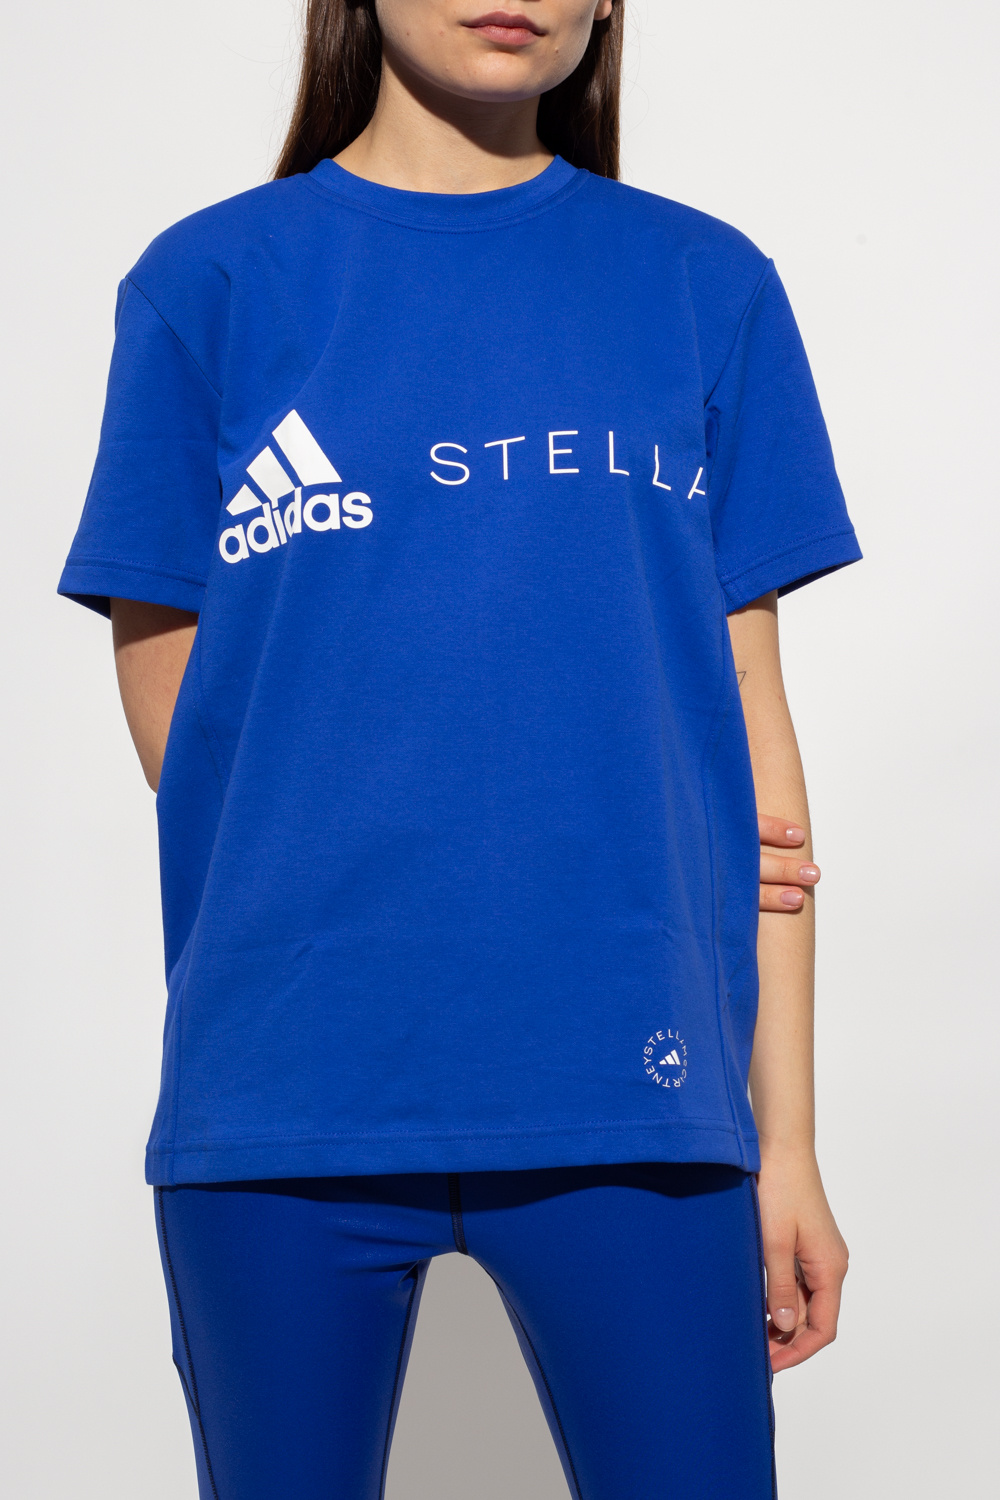 T - praktikum adidas jersey for women - shirt with logo by Stella McCartney GB